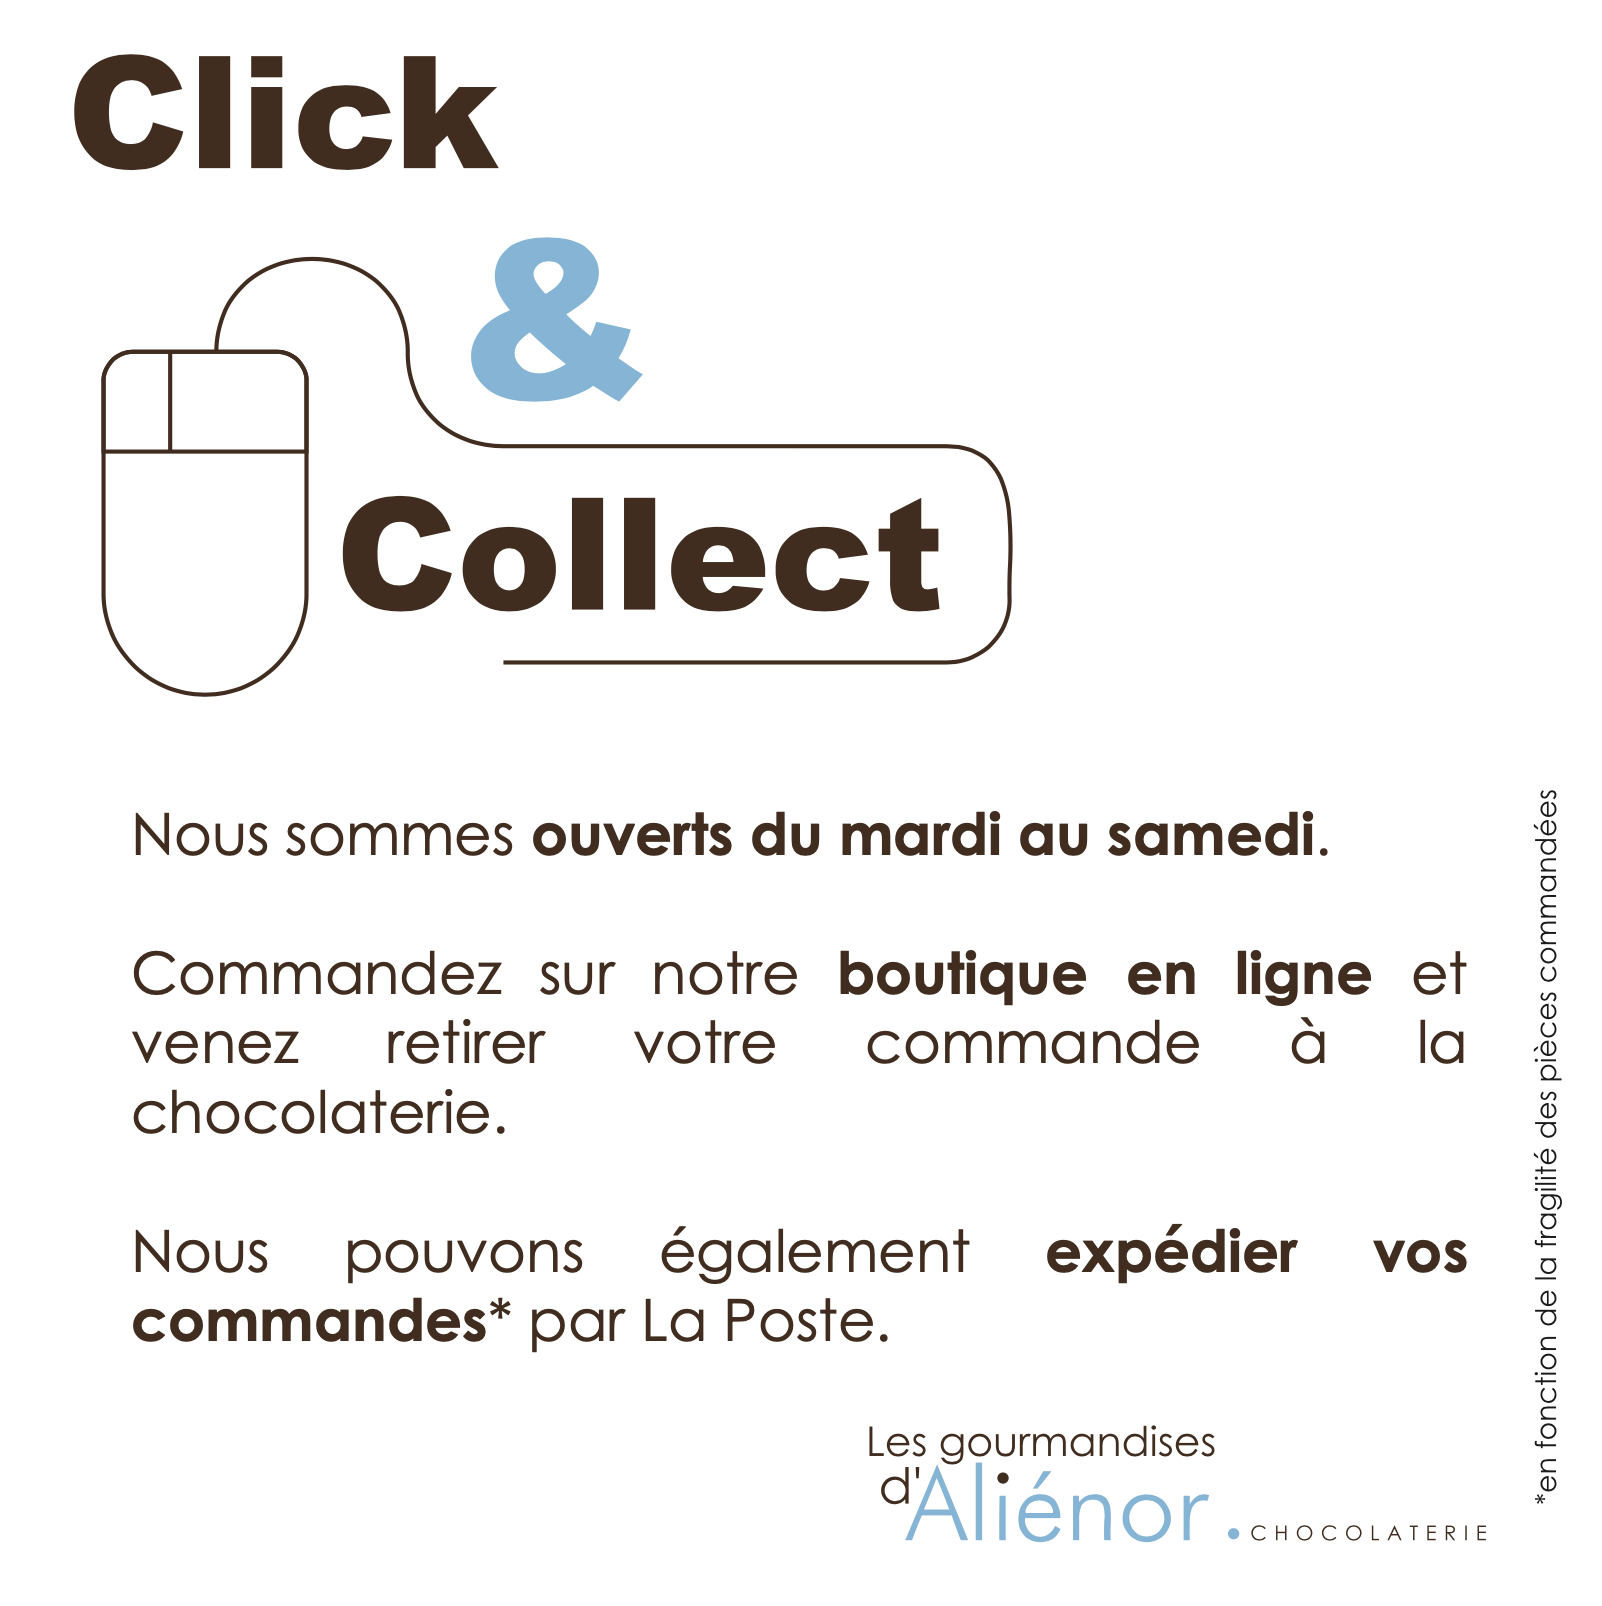 Click and Collect à la chocolaterie